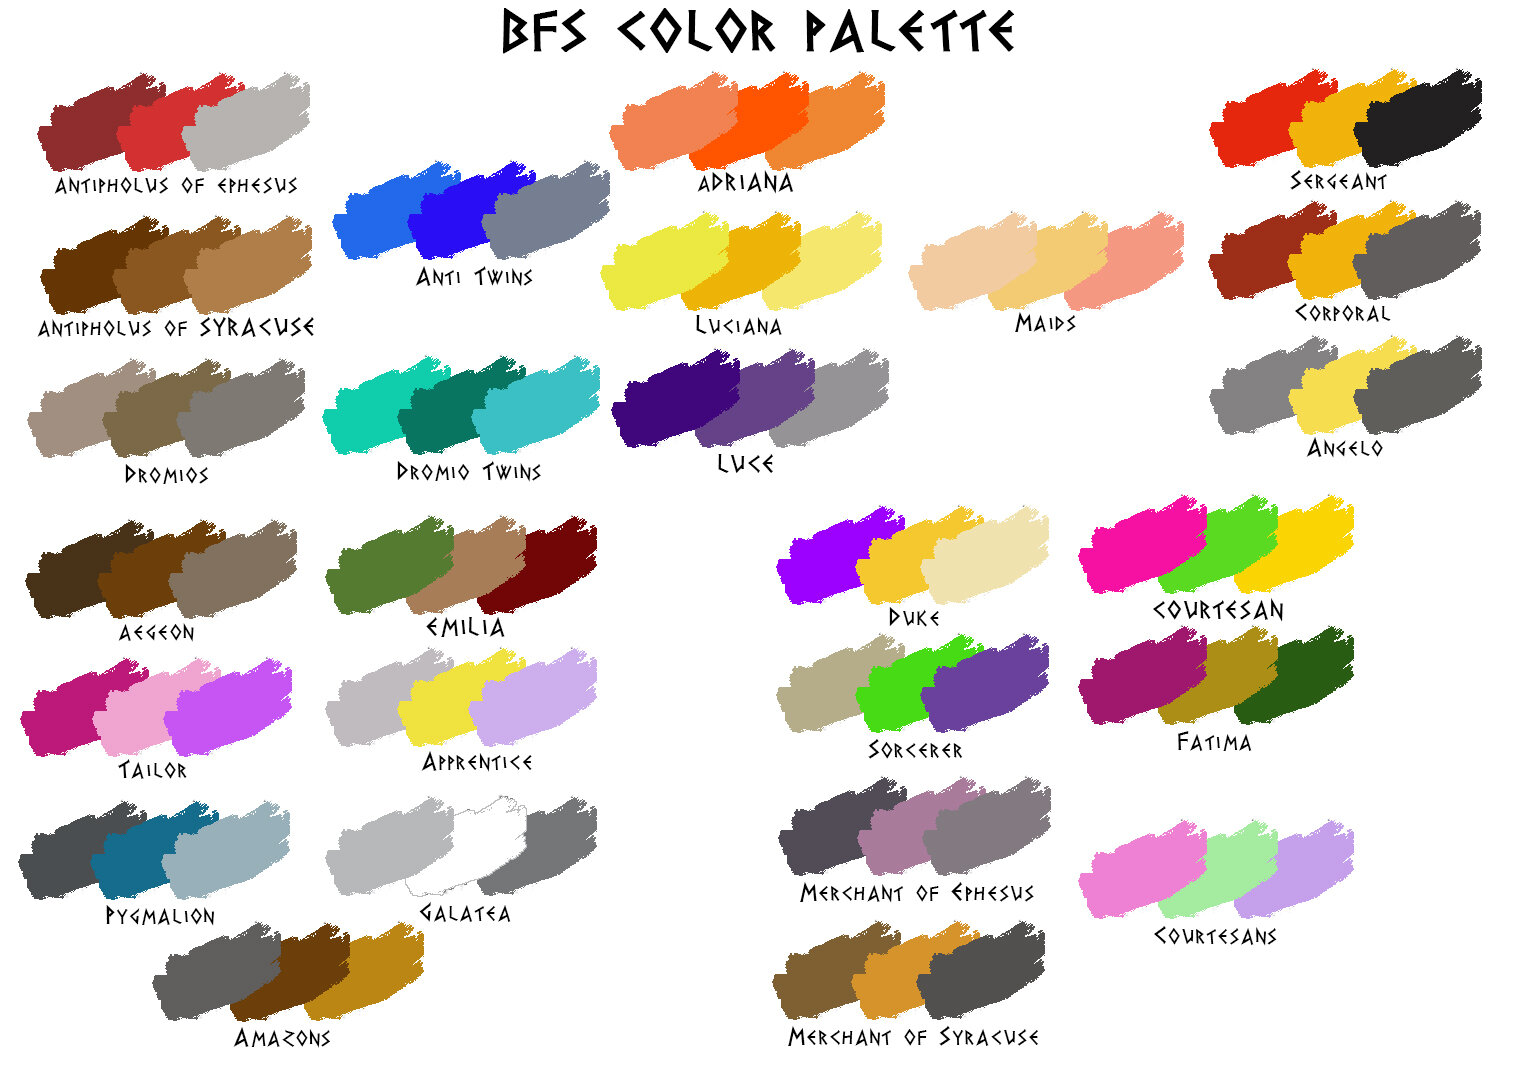 BFS Color Palette.jpg